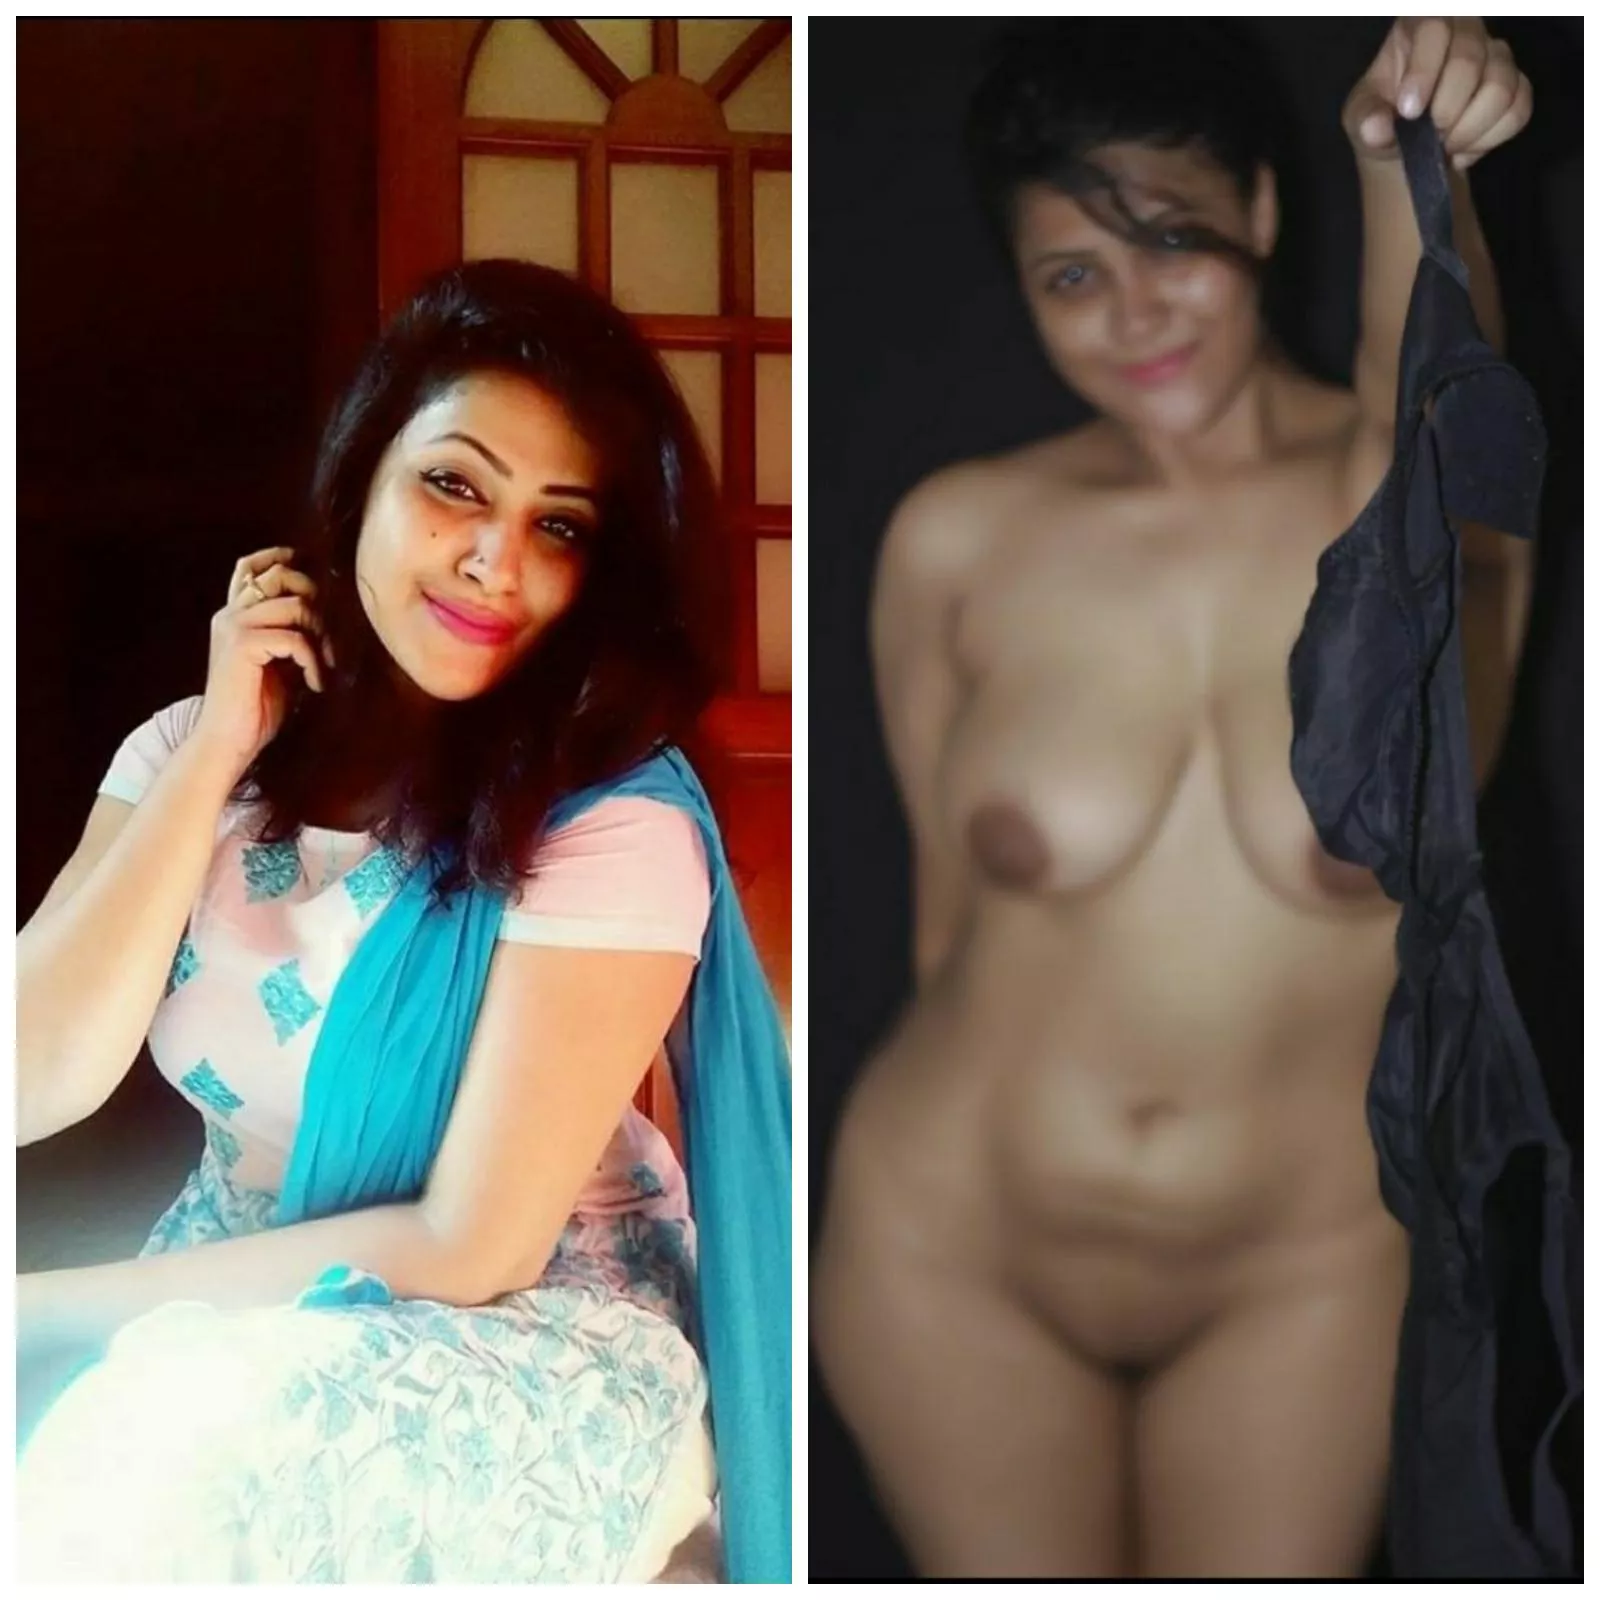 Nude models reddit instagram Tamra Judge,